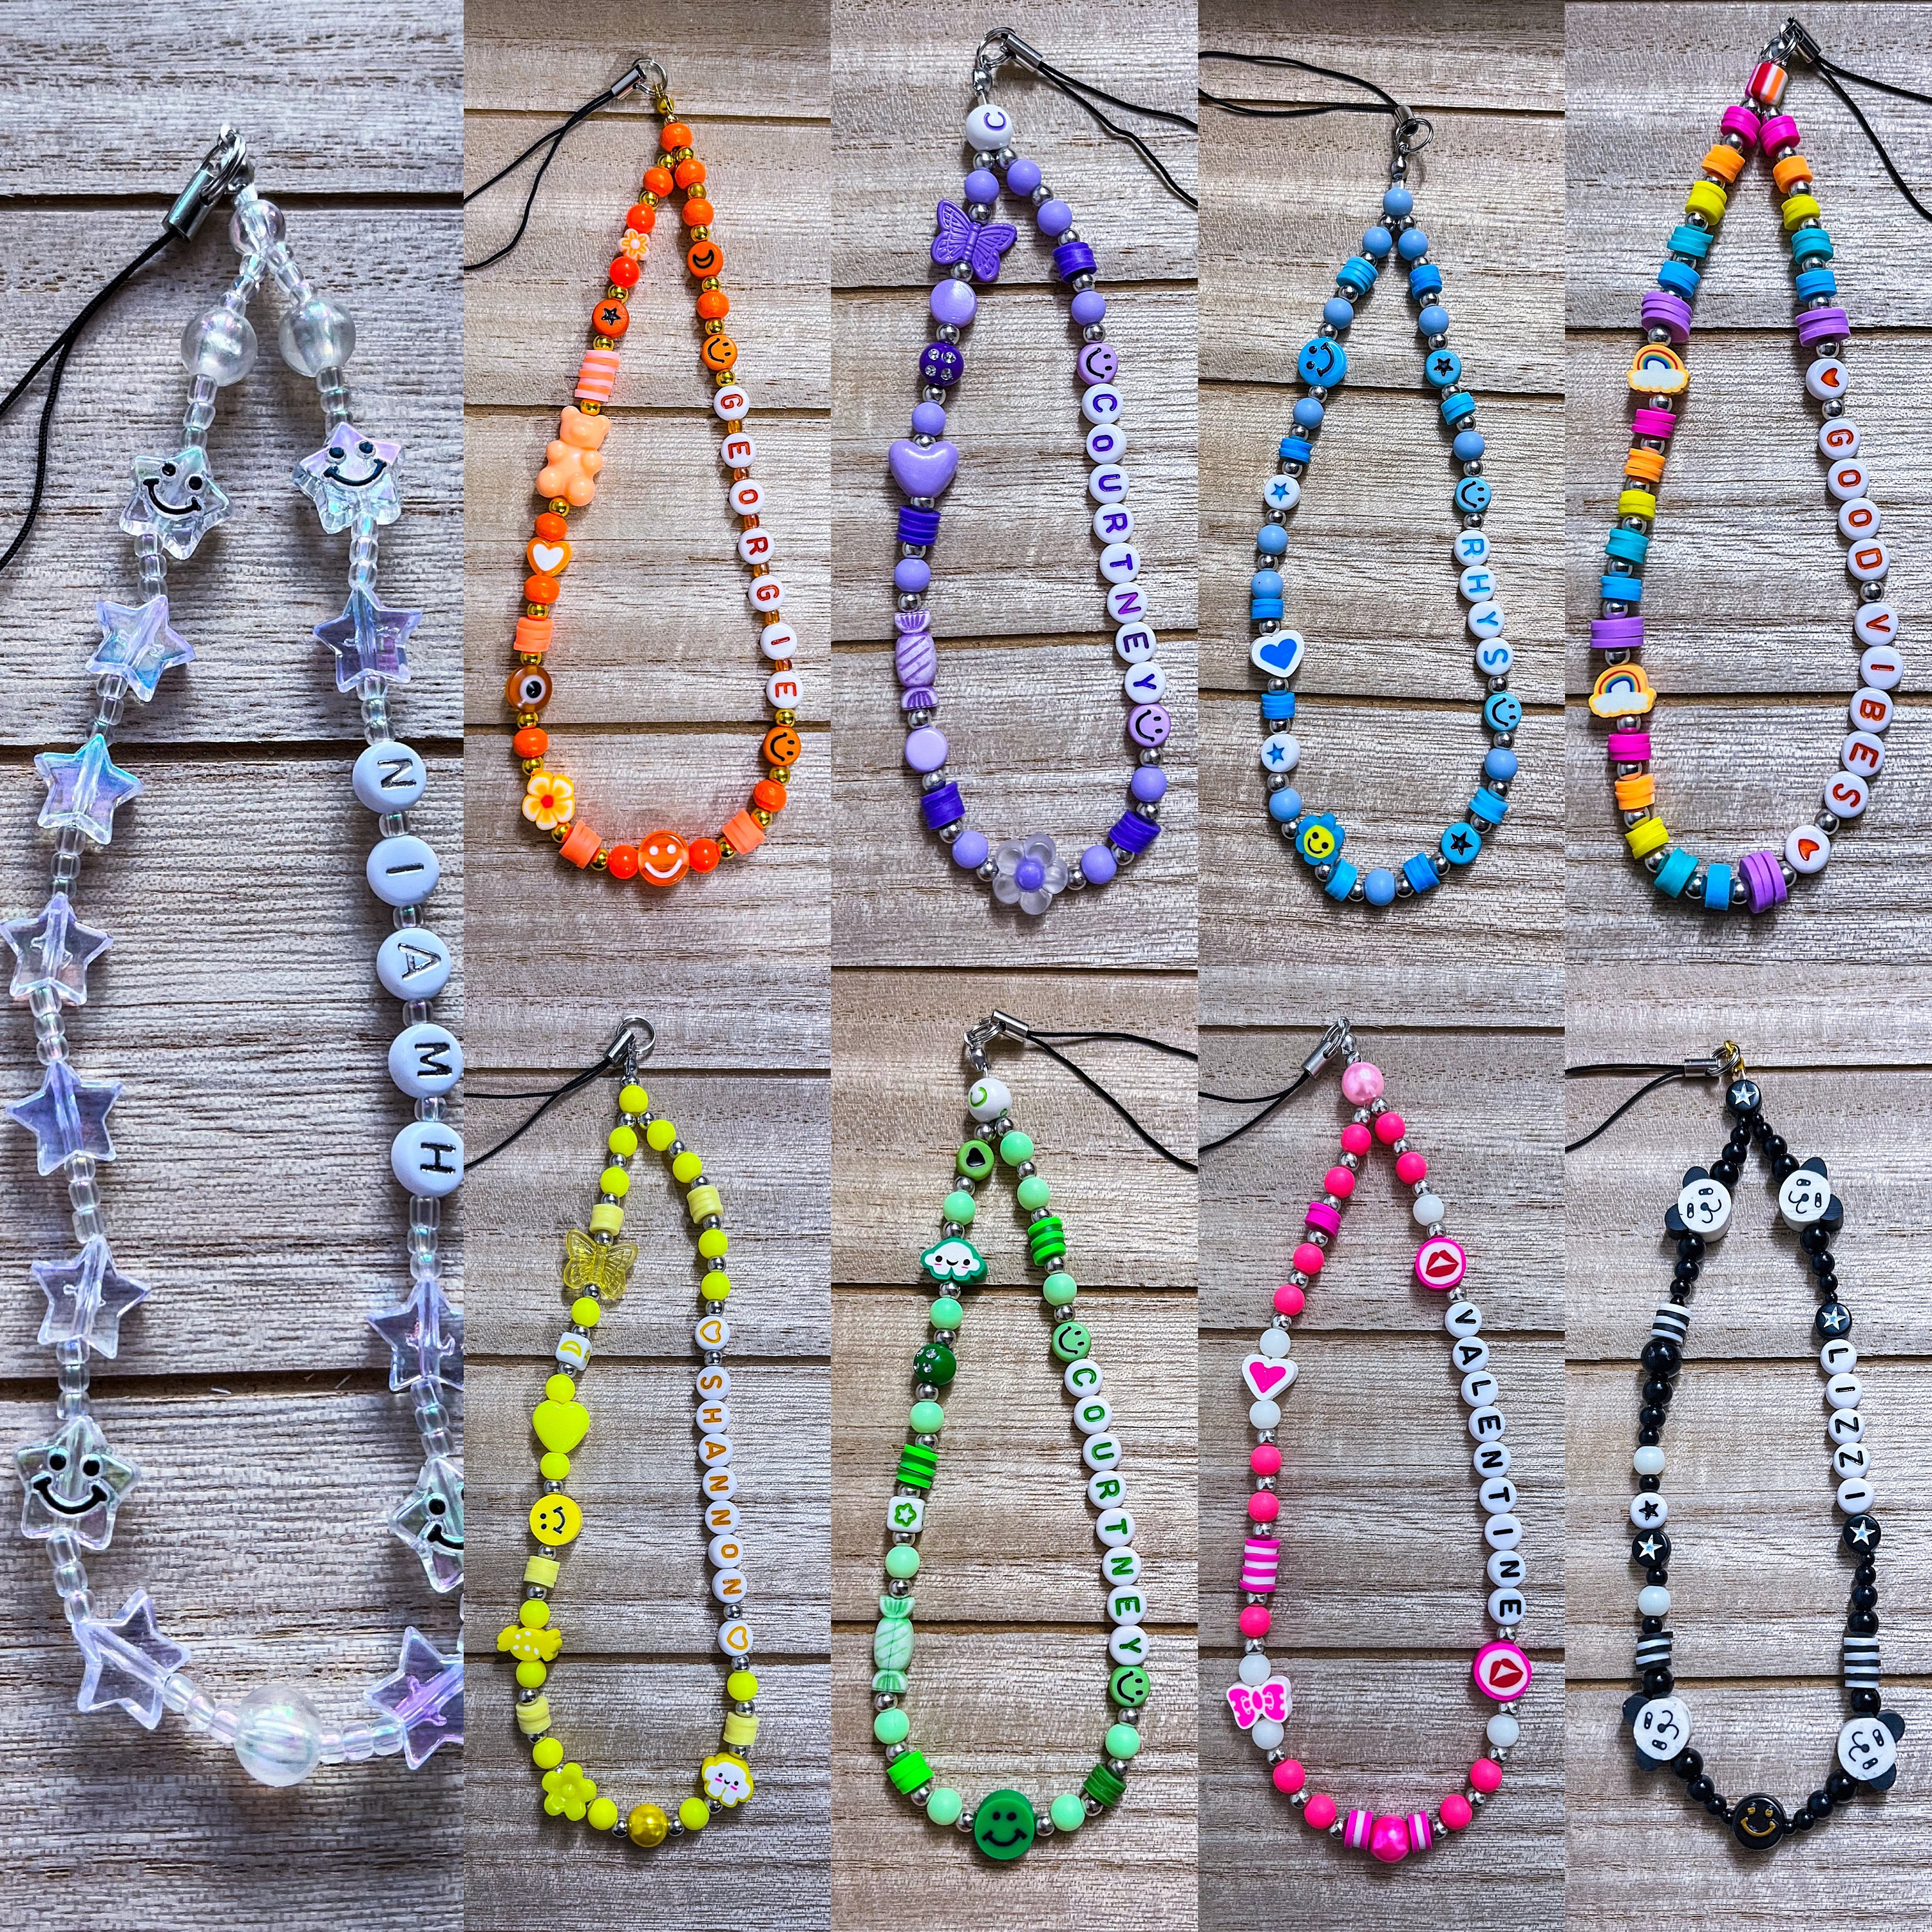 Mixed Acrylic Phone Charm Beads, 50g Acrylic Beads, DIY Bead